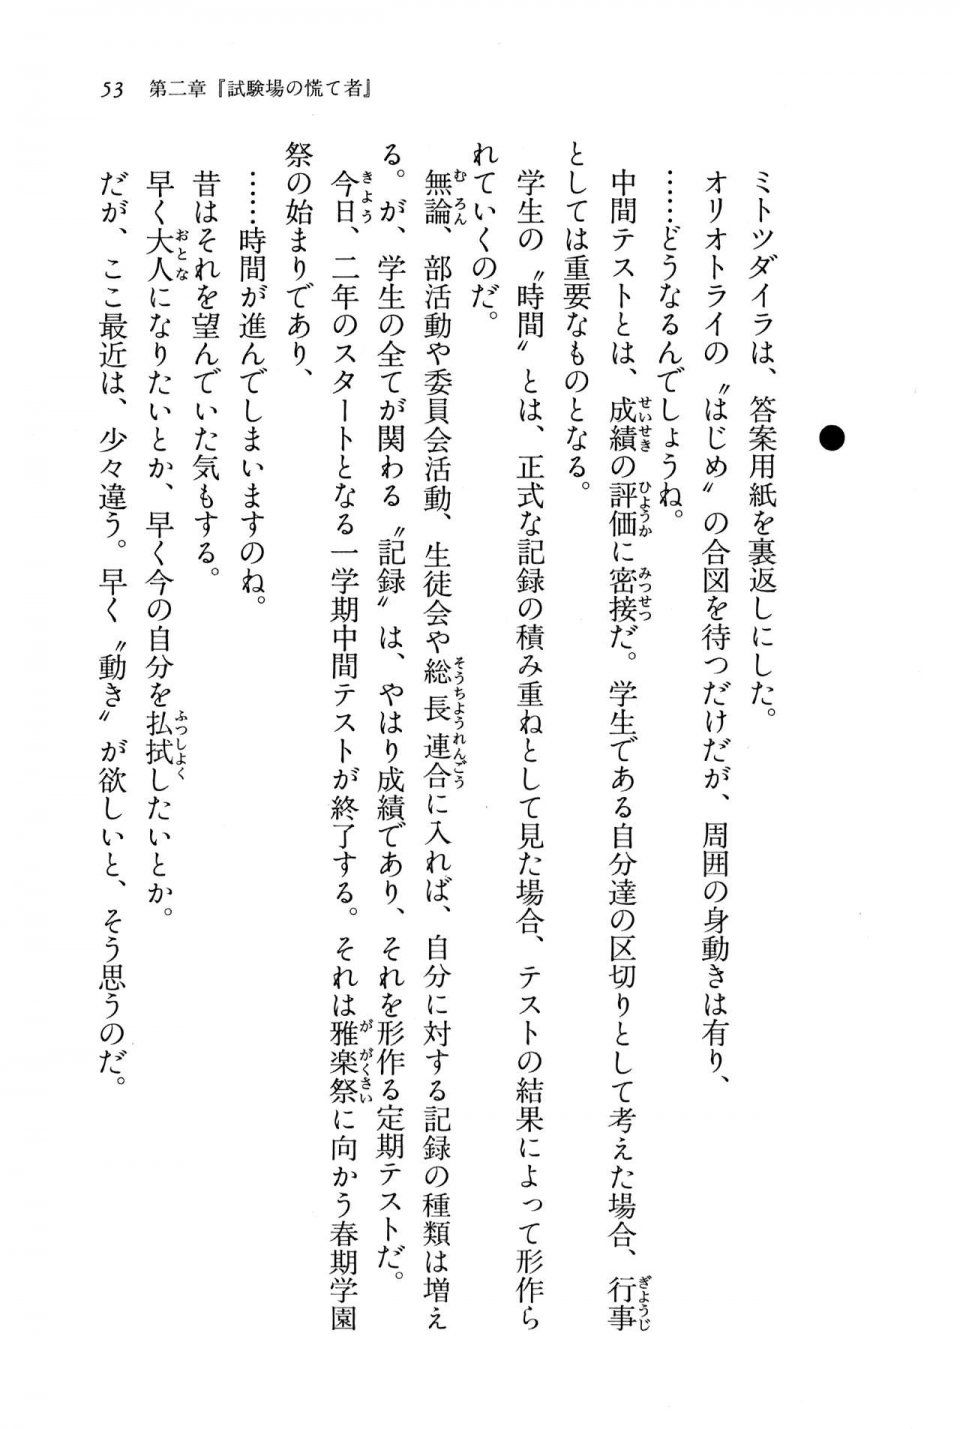 Kyoukai Senjou no Horizon BD Special Mininovel Vol 7(4A) - Photo #57